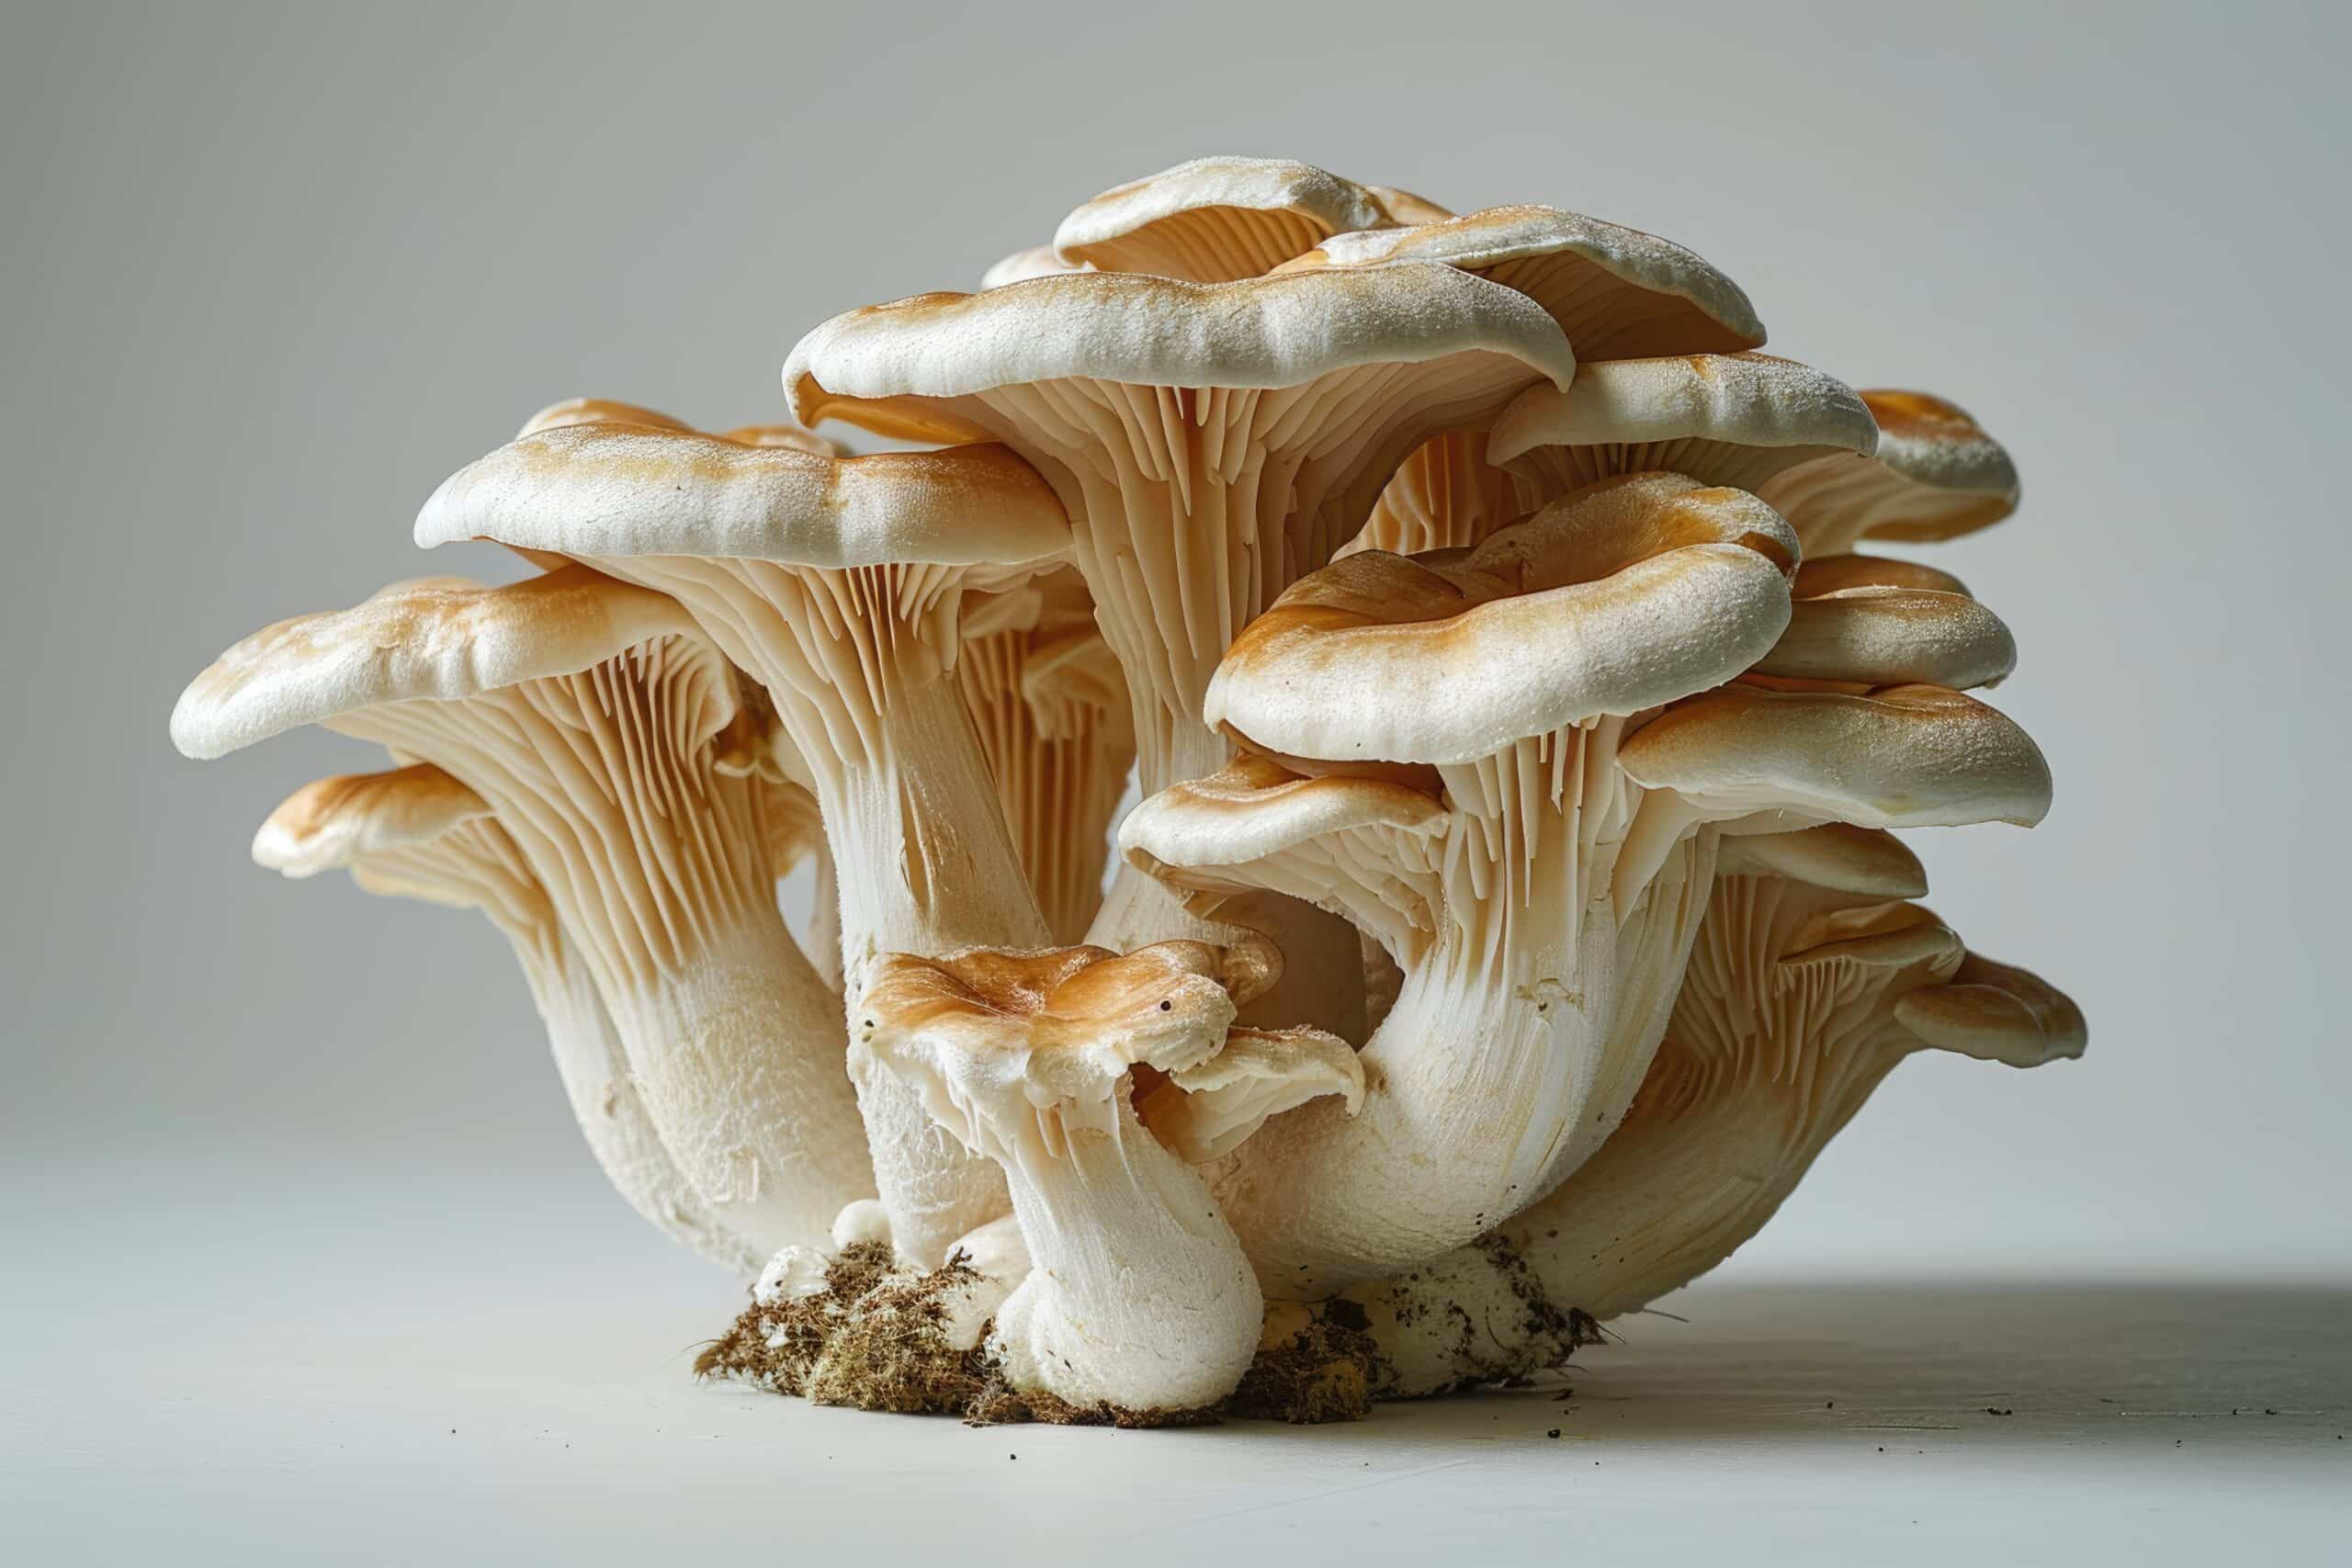 growmyownhealthfood.com : Is there a false chicken of the woods mushroom?